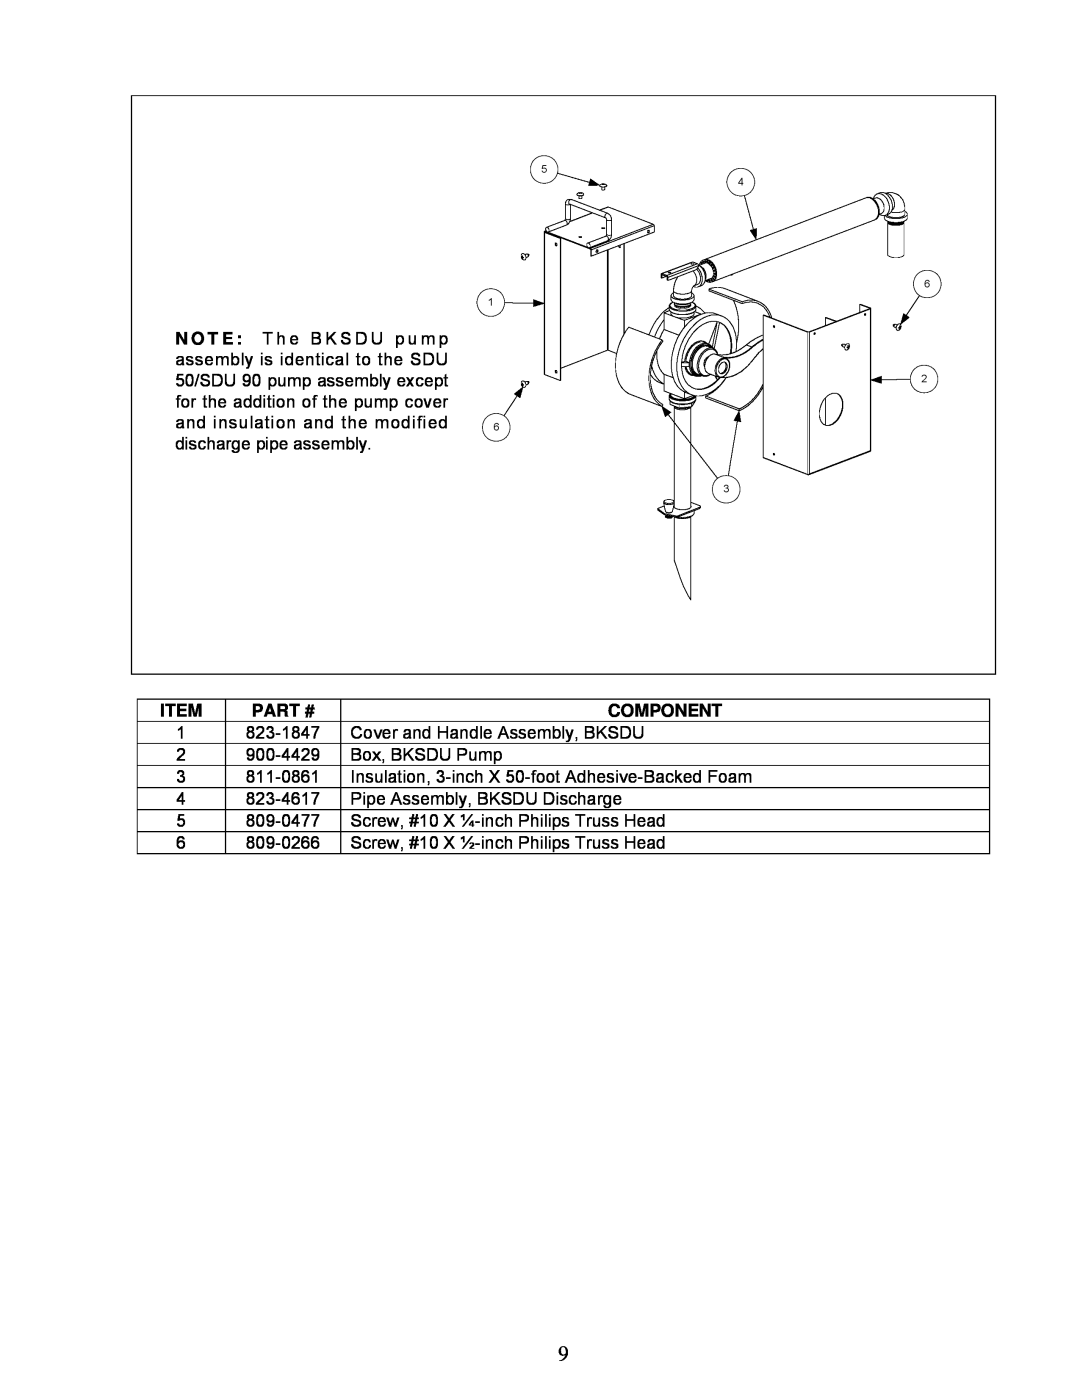 Frymaster BKSDU, SDU90, SDU50 manual Part #, Component 